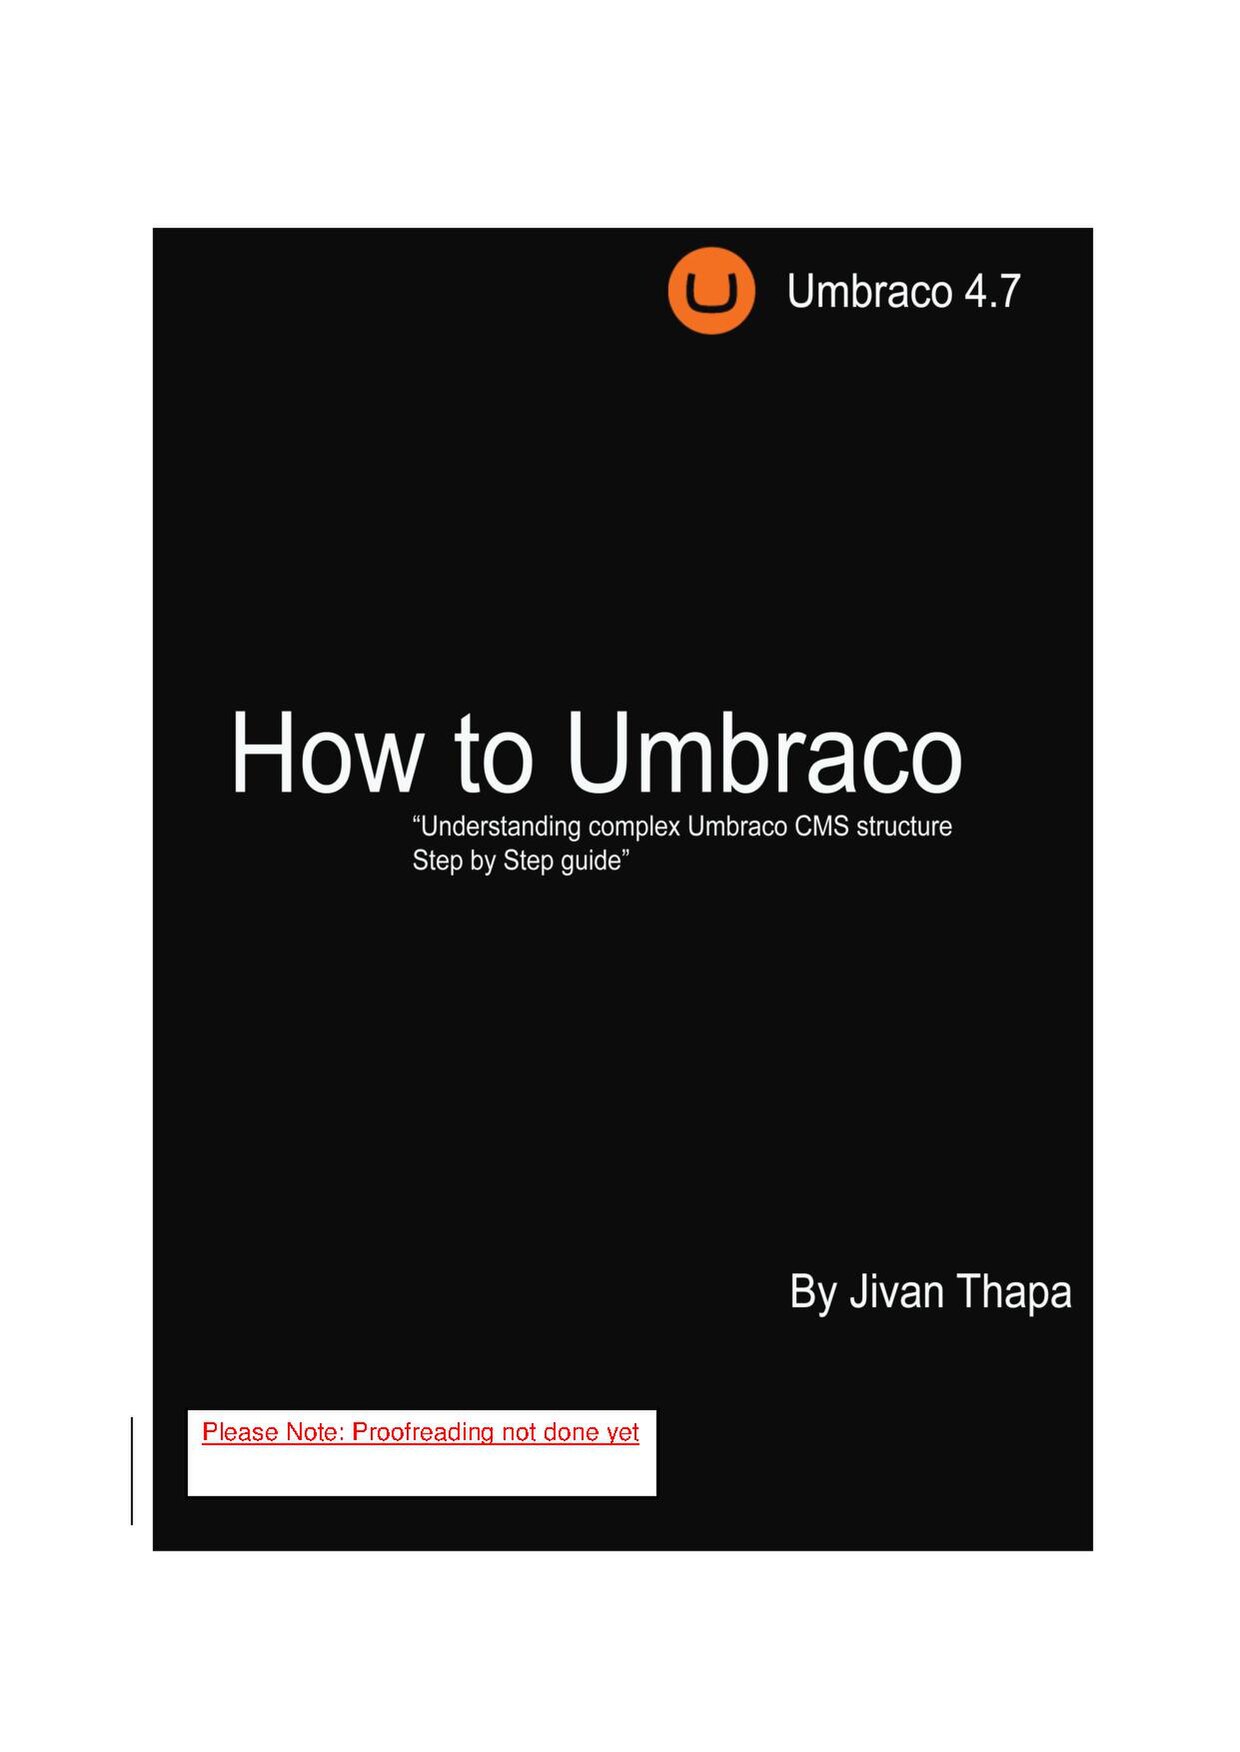 File:How to Umbraco digital book.pdf - Wikimedia Commons